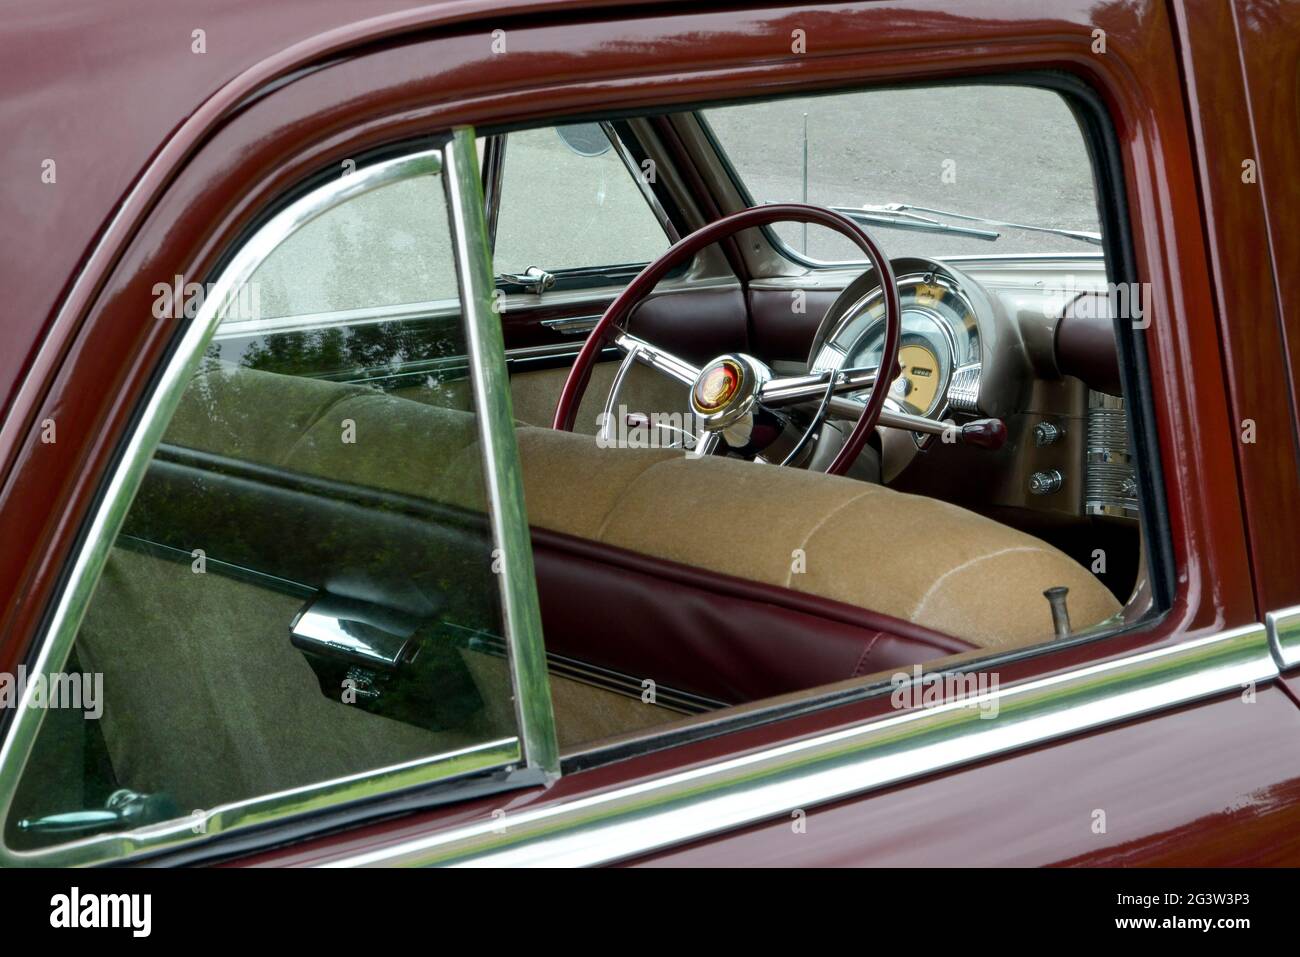 The 1949 Chrysler dashboard is seen through an open rear window. Stock Photo